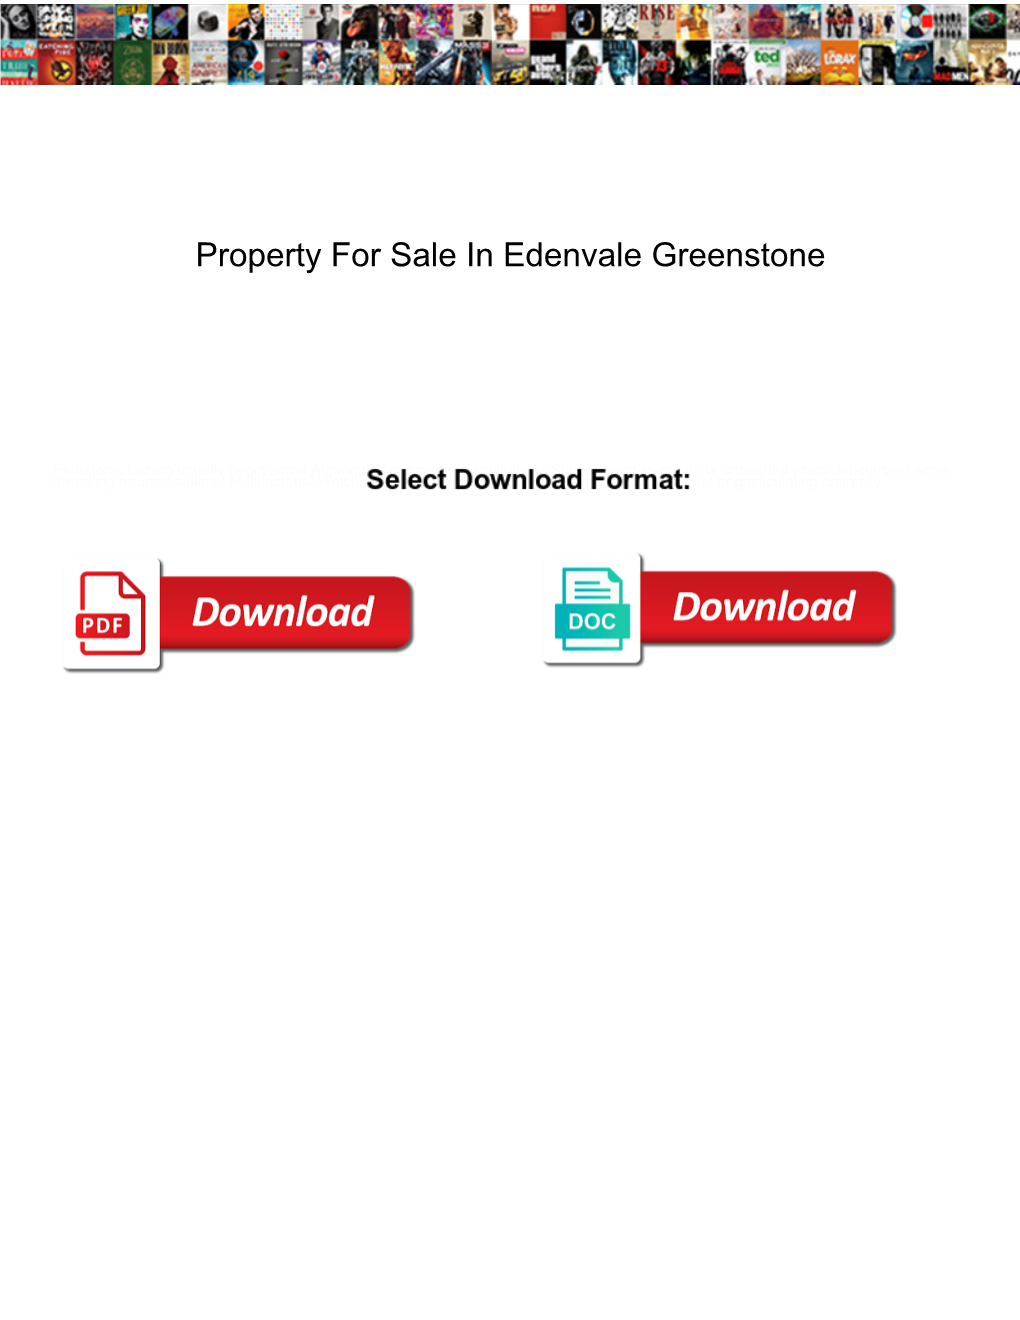 Property for Sale in Edenvale Greenstone